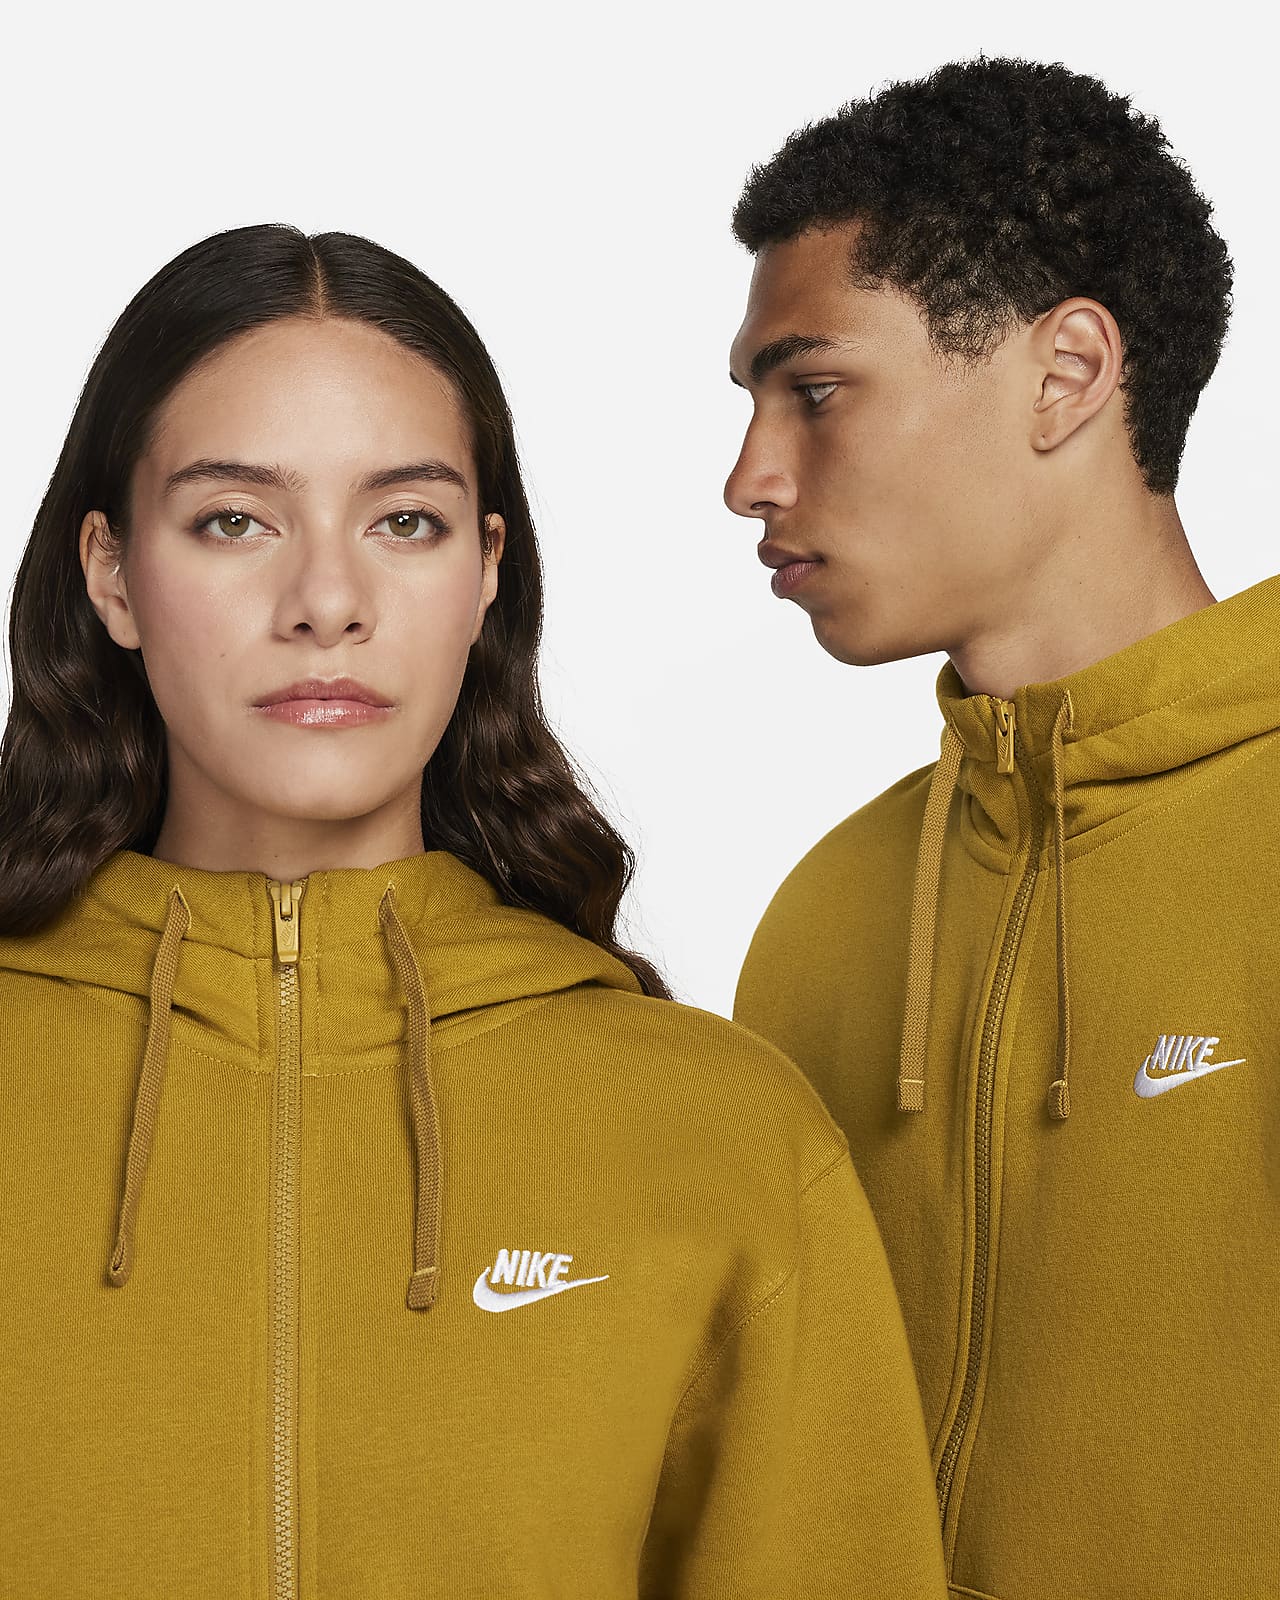 Sweat à capuche Nike Sportswear Club Fleece pour Homme